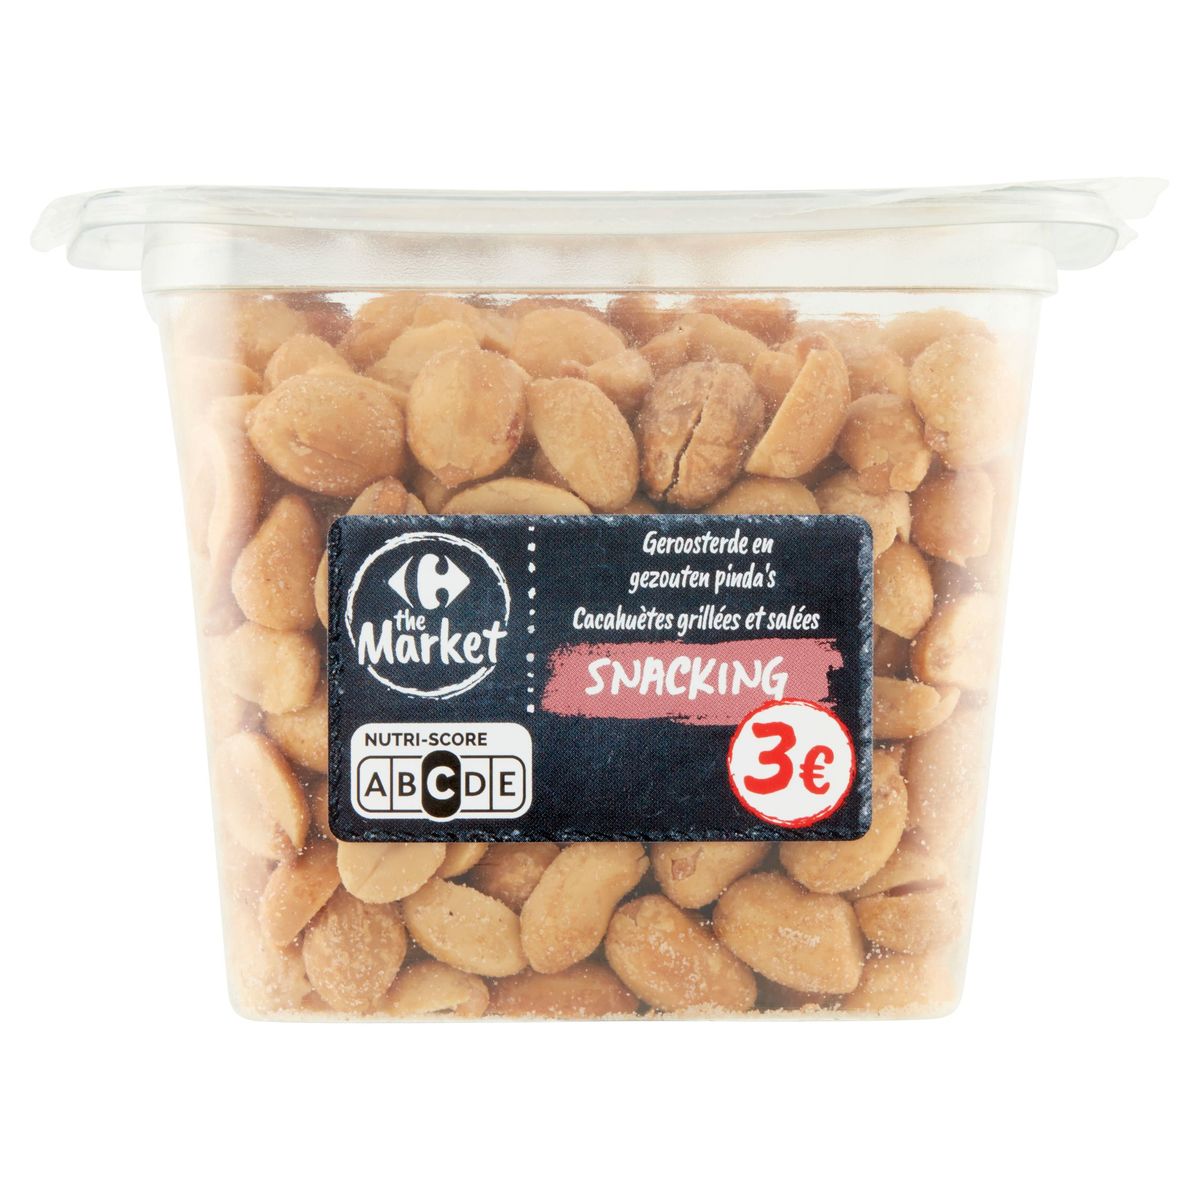 Carrefour The Market Nuts & Fruits Geroosterde en Gezouten Pinda's Snacking 225 g